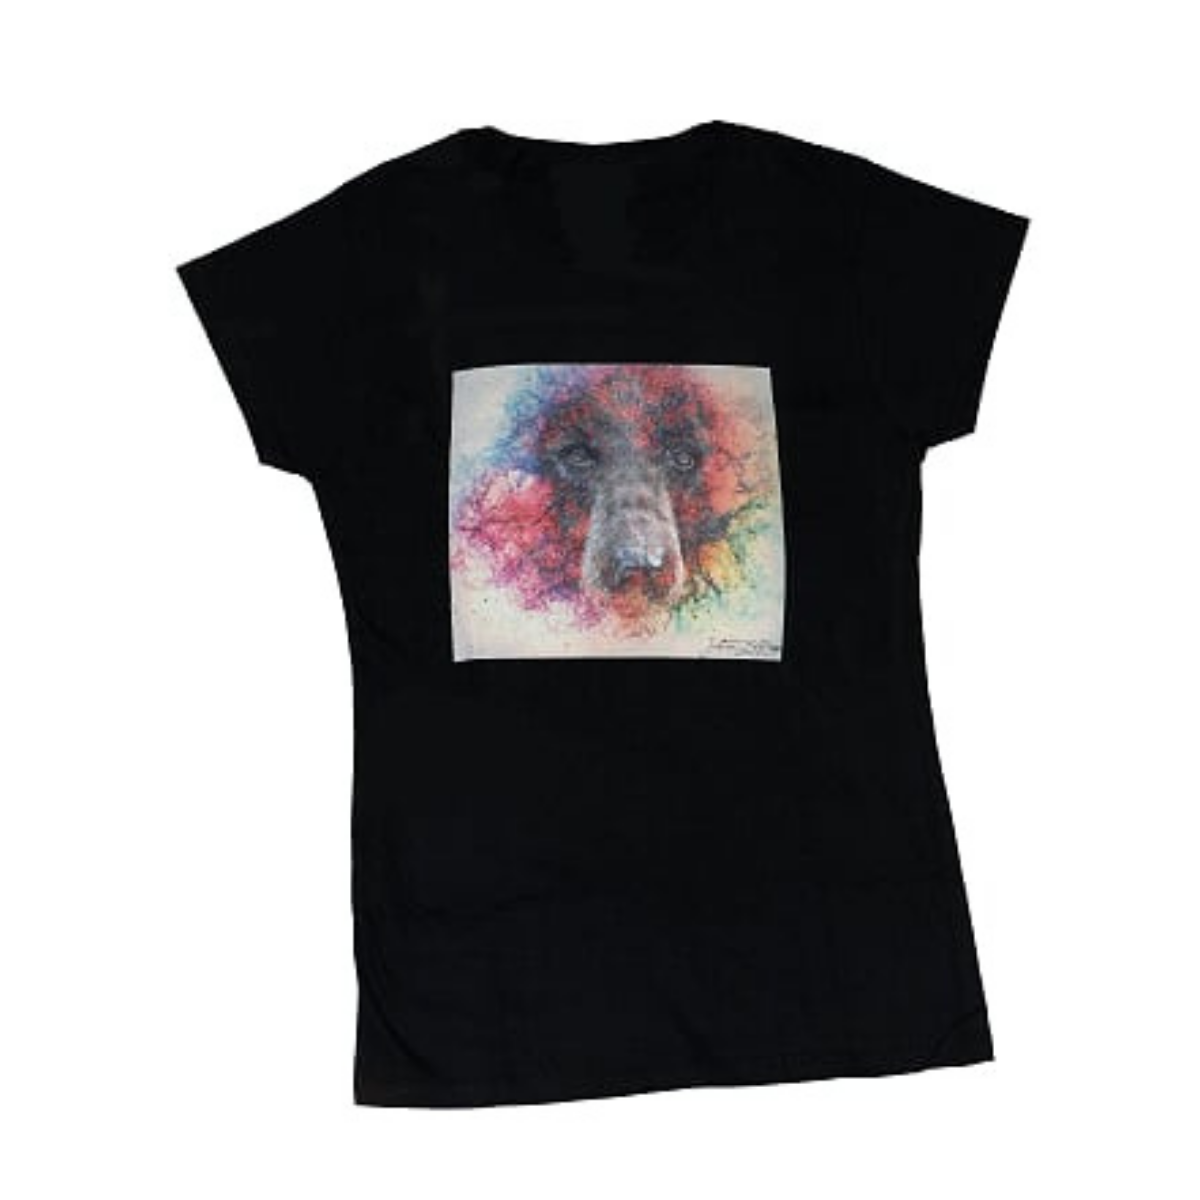 Women's T-Shirt - Rainbow Bear by Justin LeRose (Black)